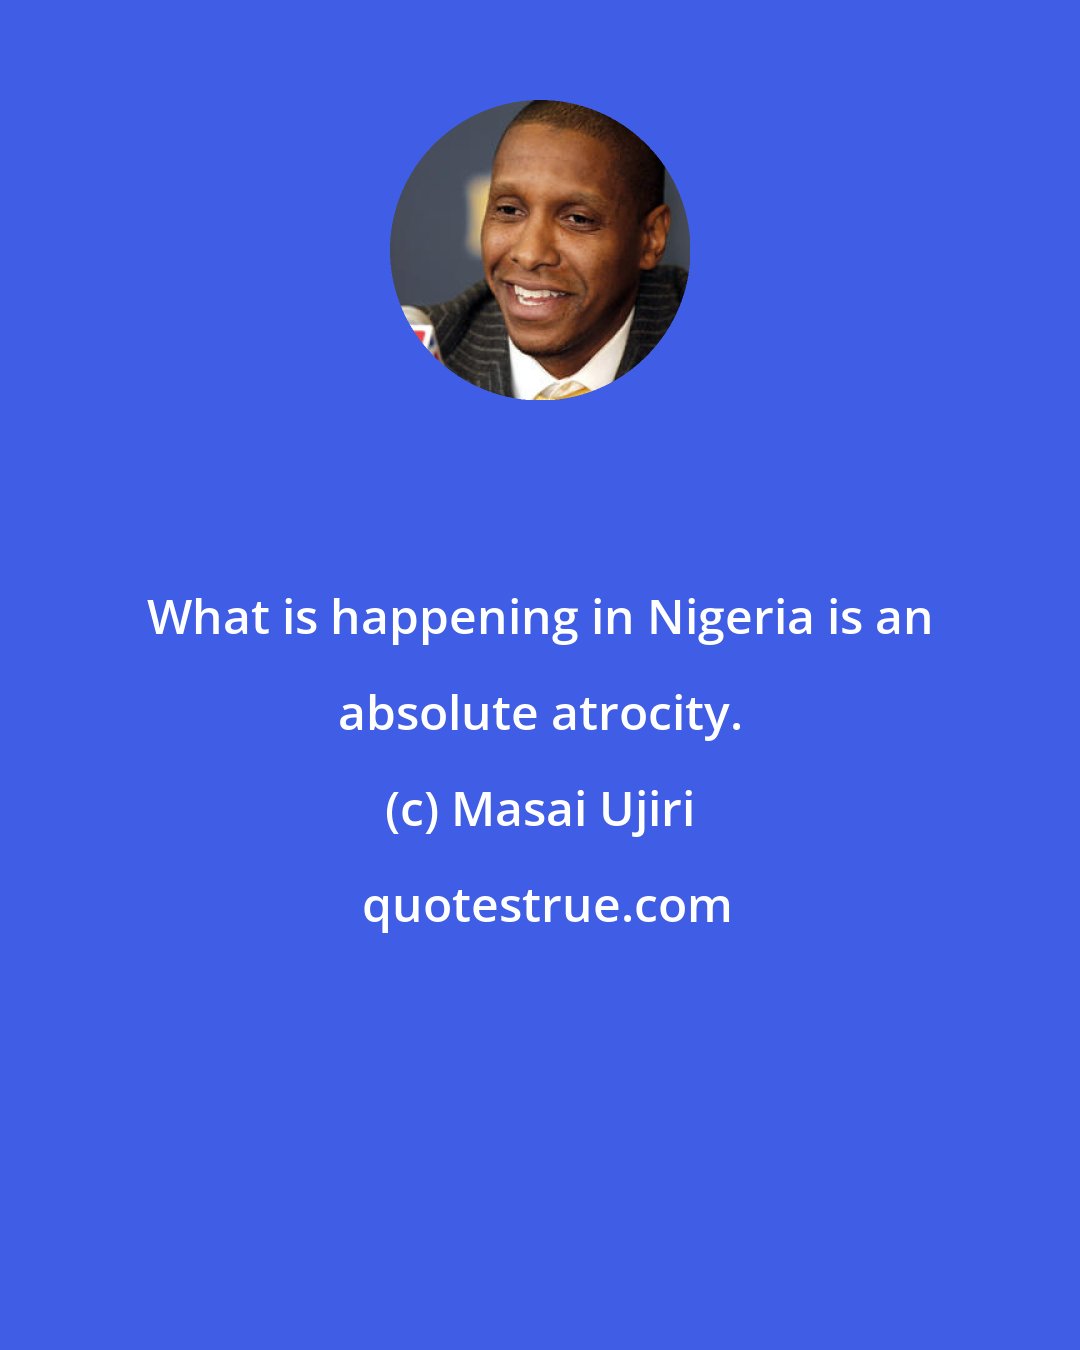 Masai Ujiri: What is happening in Nigeria is an absolute atrocity.